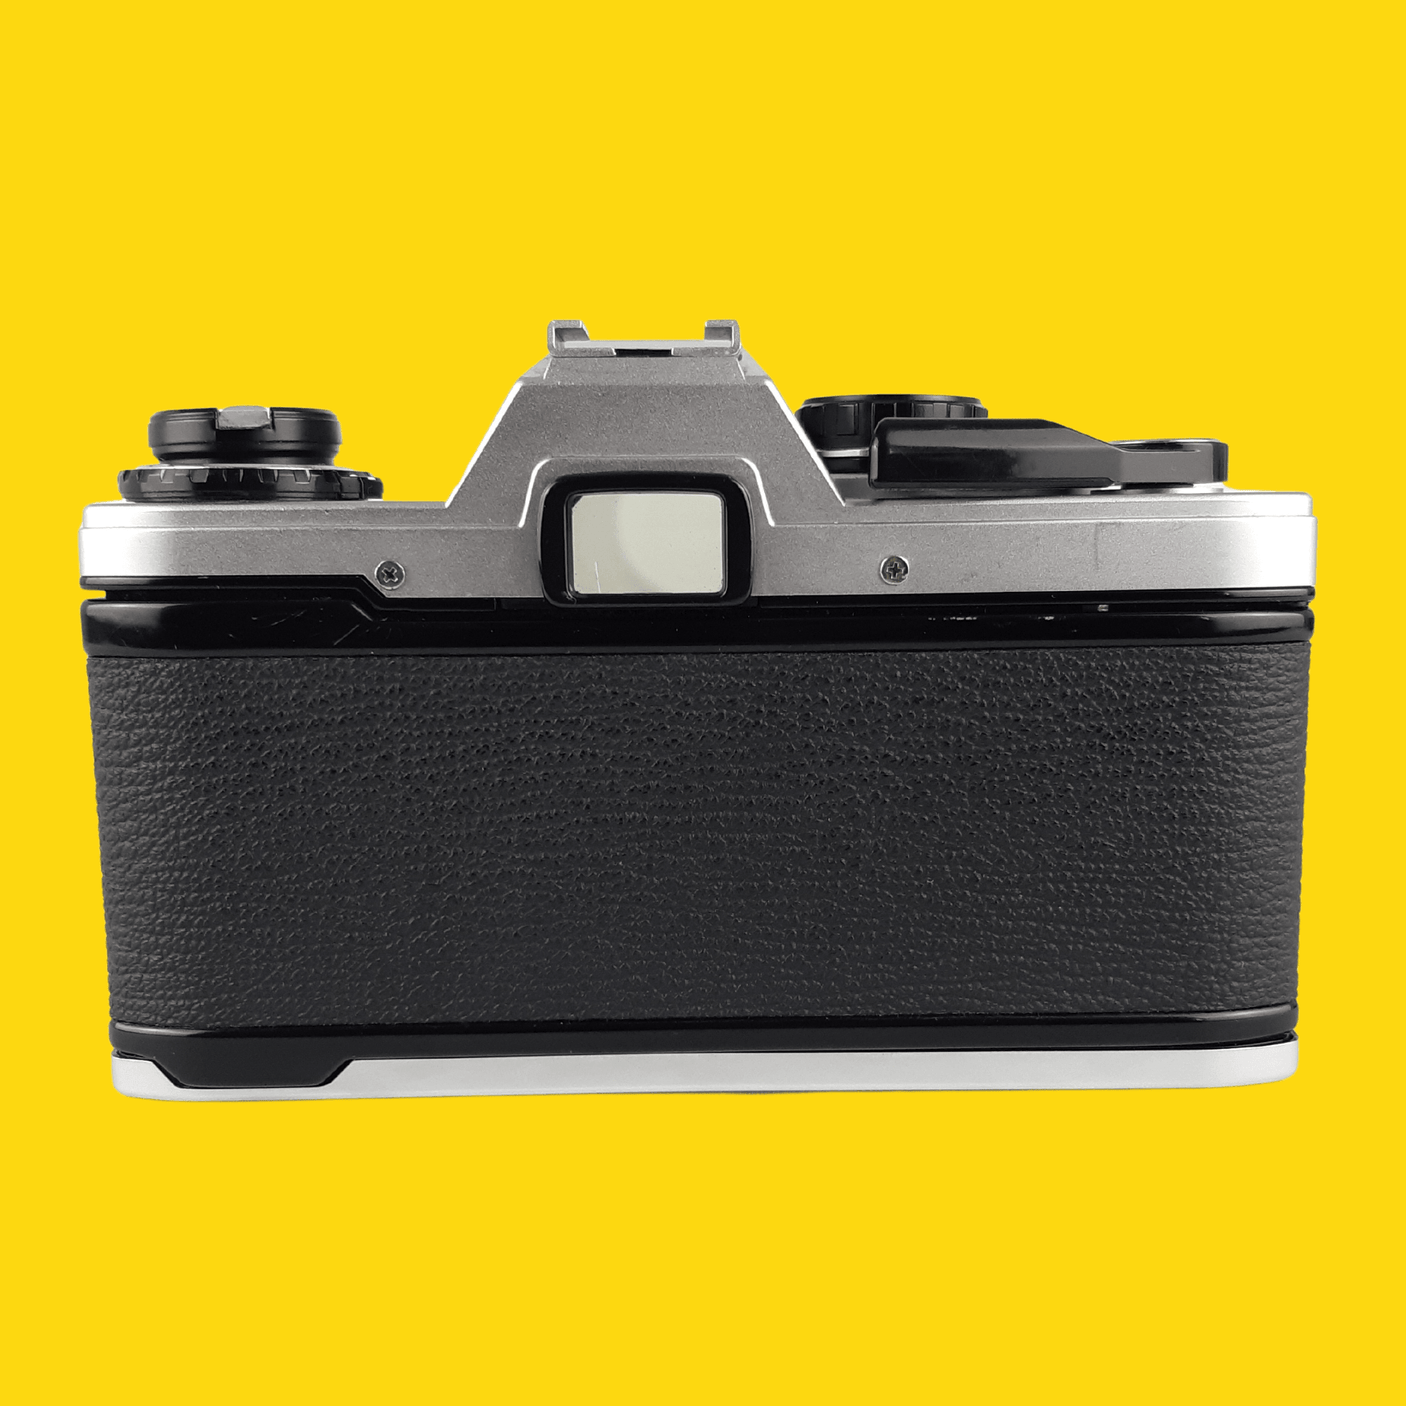 Olympus OM-10 Vintage 35mm Film Camera with F/1.8 50mm Lens